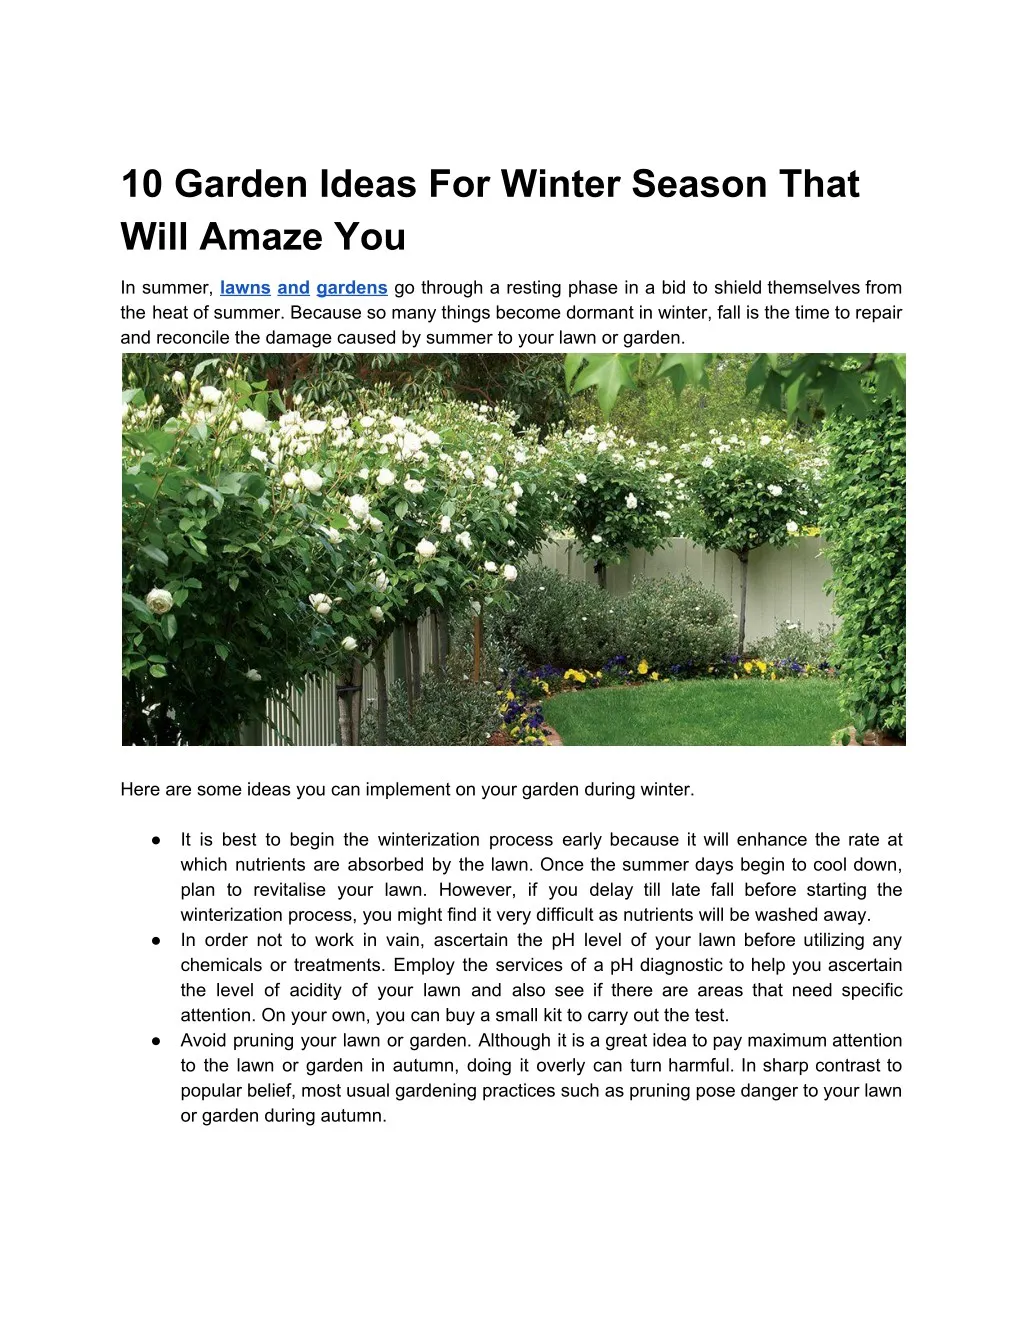 10 garden ideas for winter season that will amaze